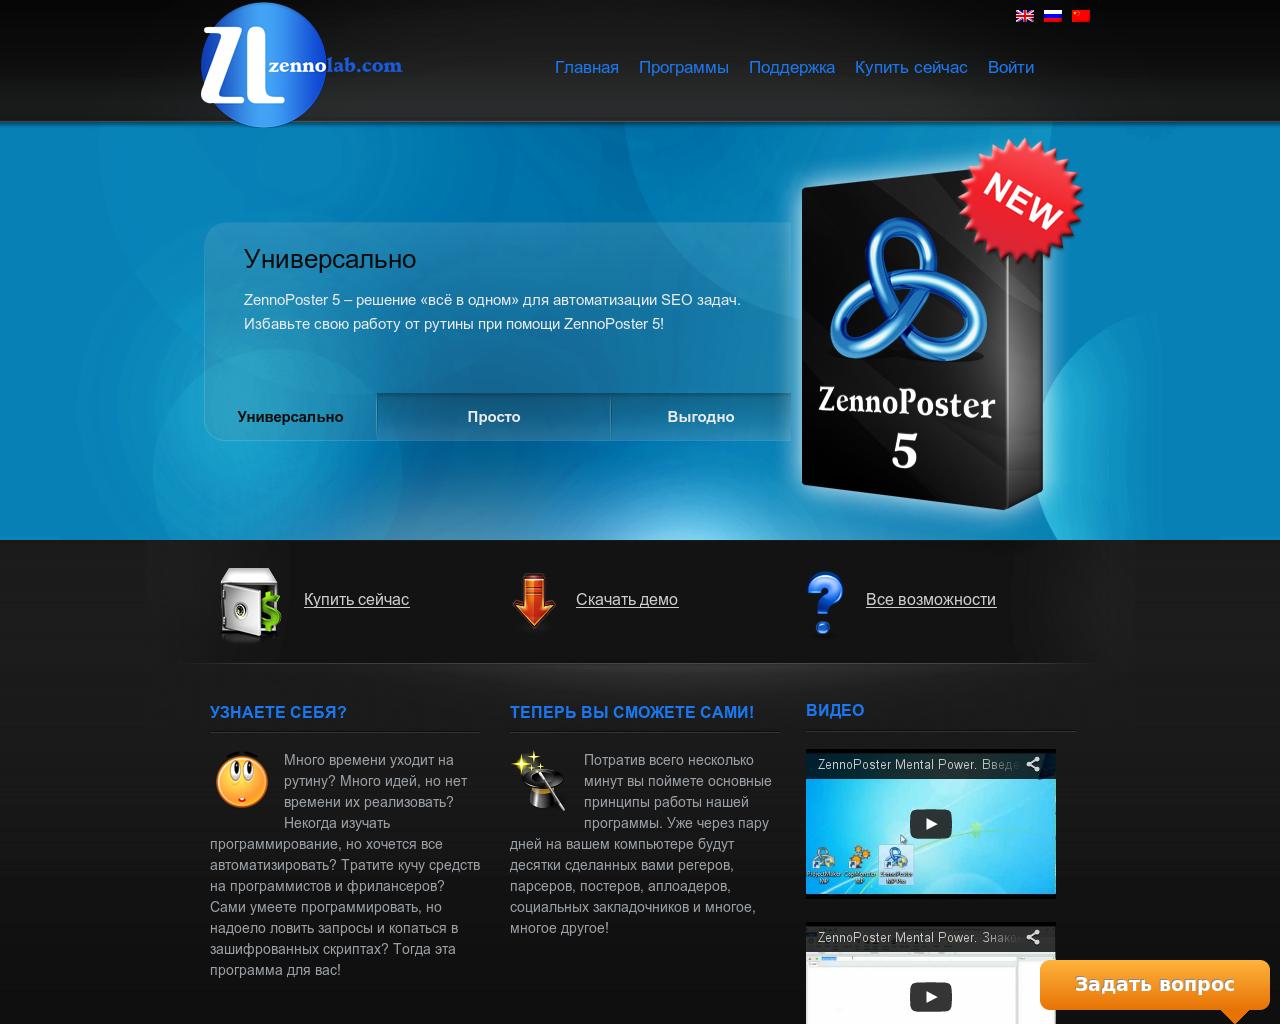 ZennoPoster 5 - Автоматизируйте любые задачи в интернете | CPA Mafia | Форум арбитражников